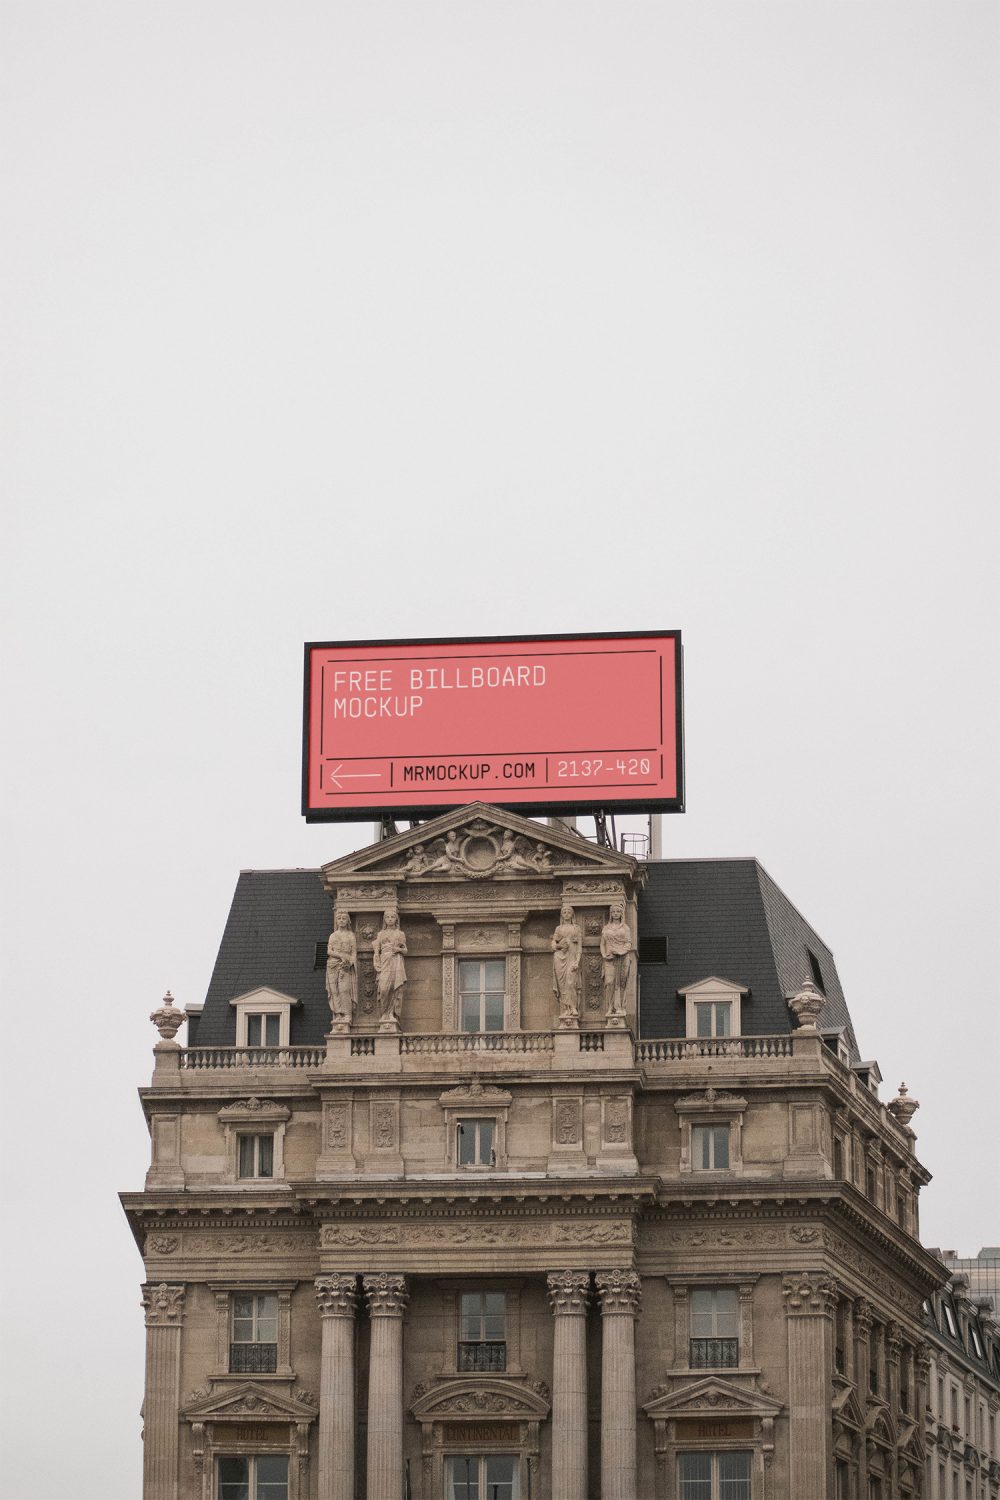 Billboard on Tenement Mockup